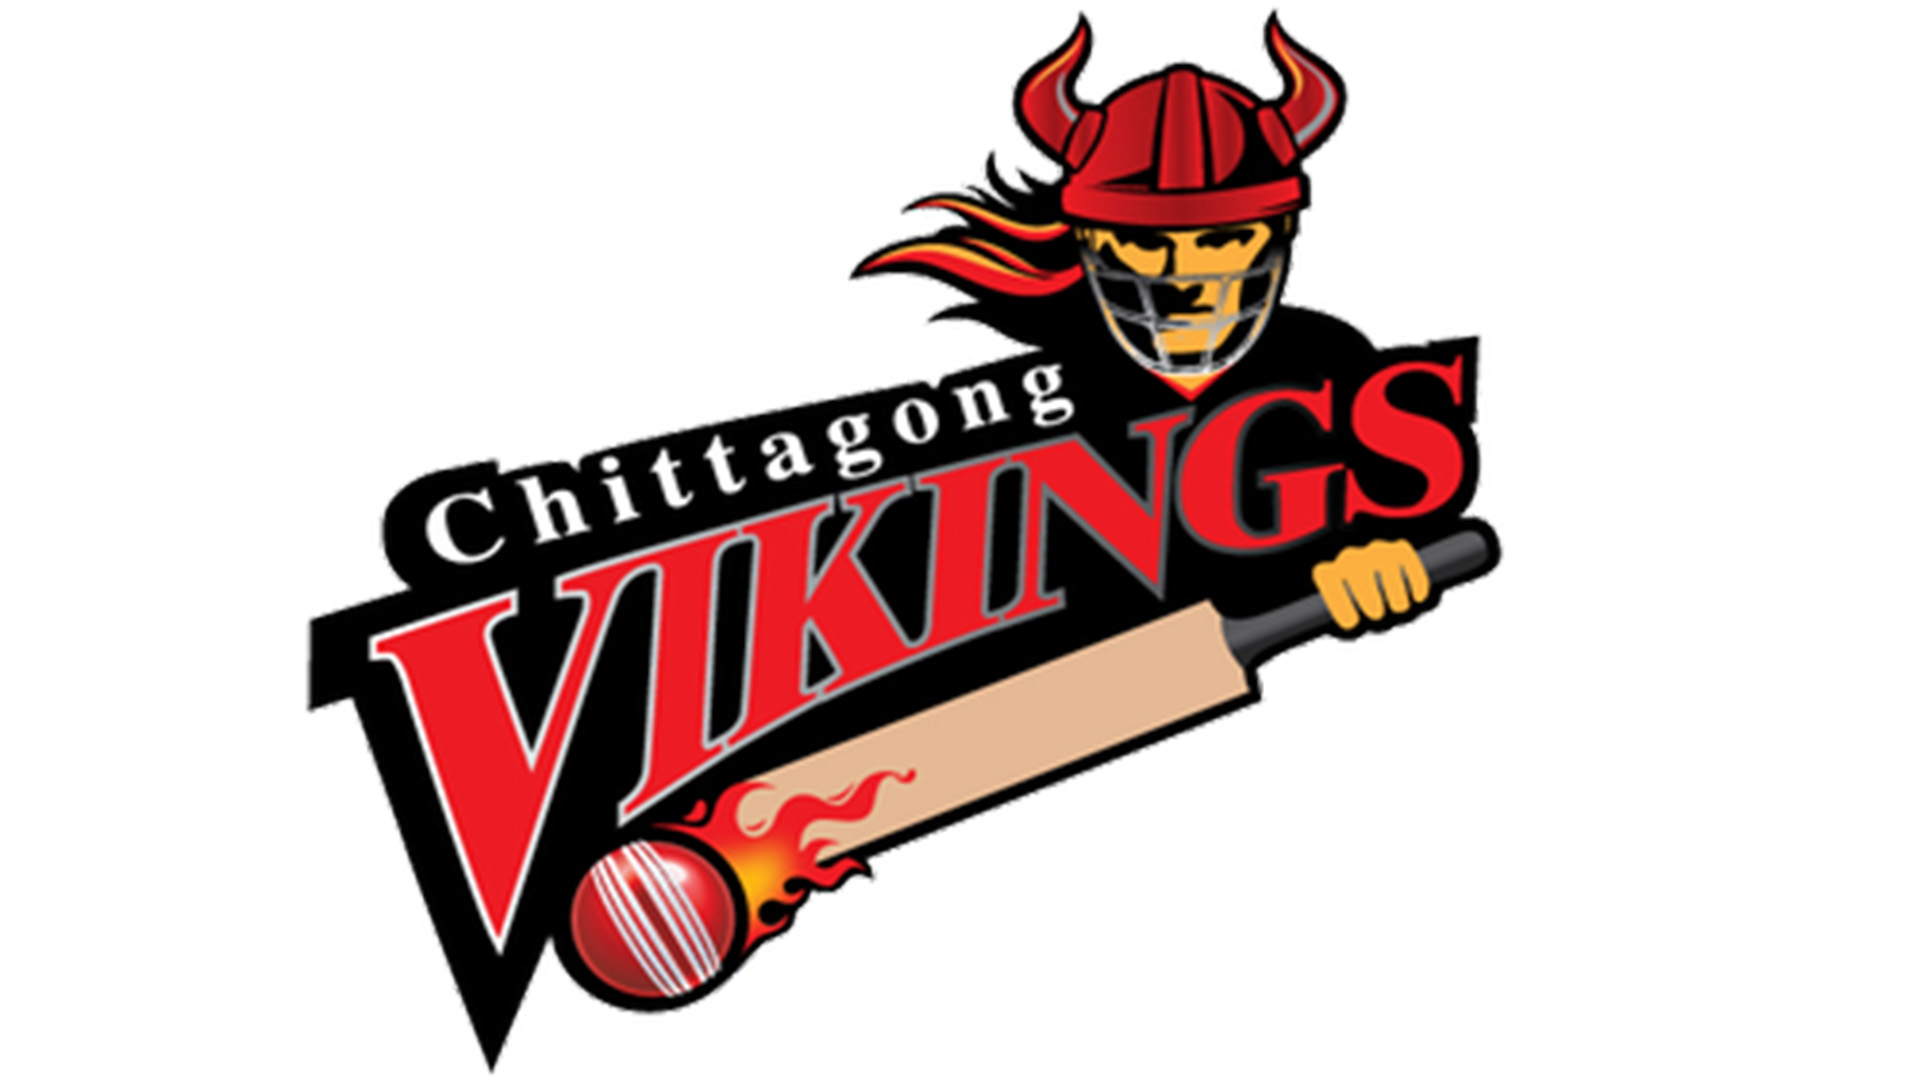 Chittagong Vikings team logo 2017